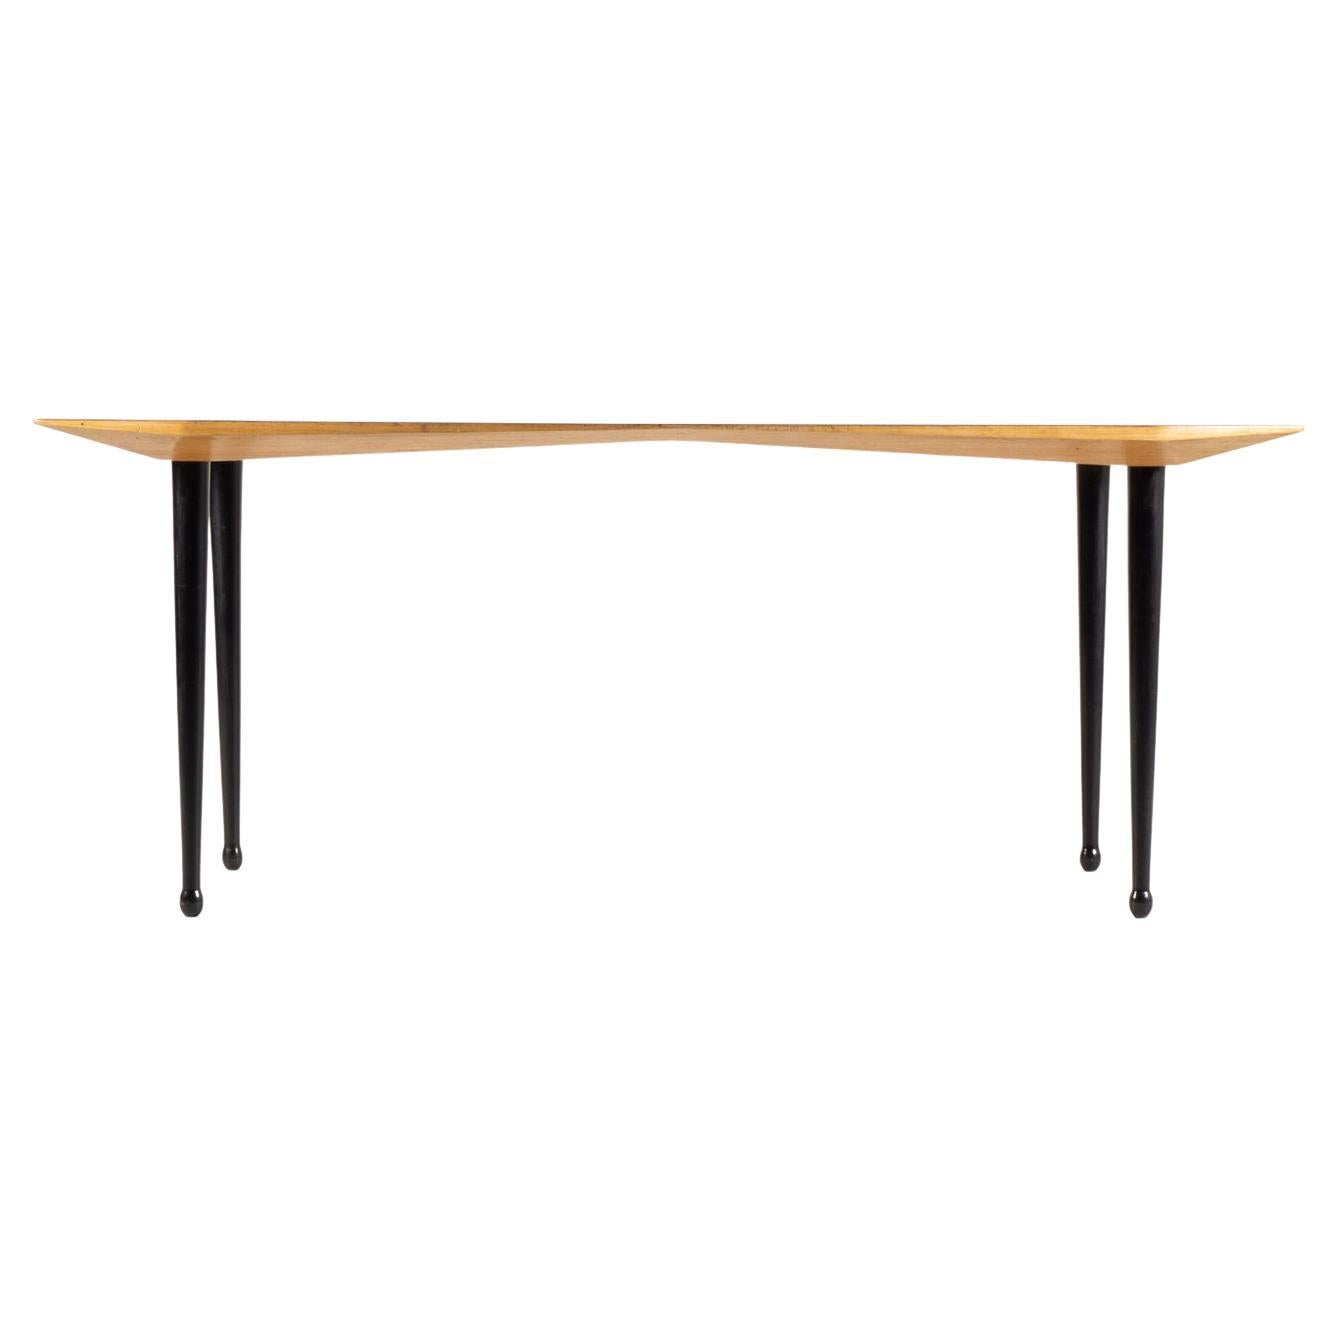 Table / Carlo de Carli / Tecno Milano